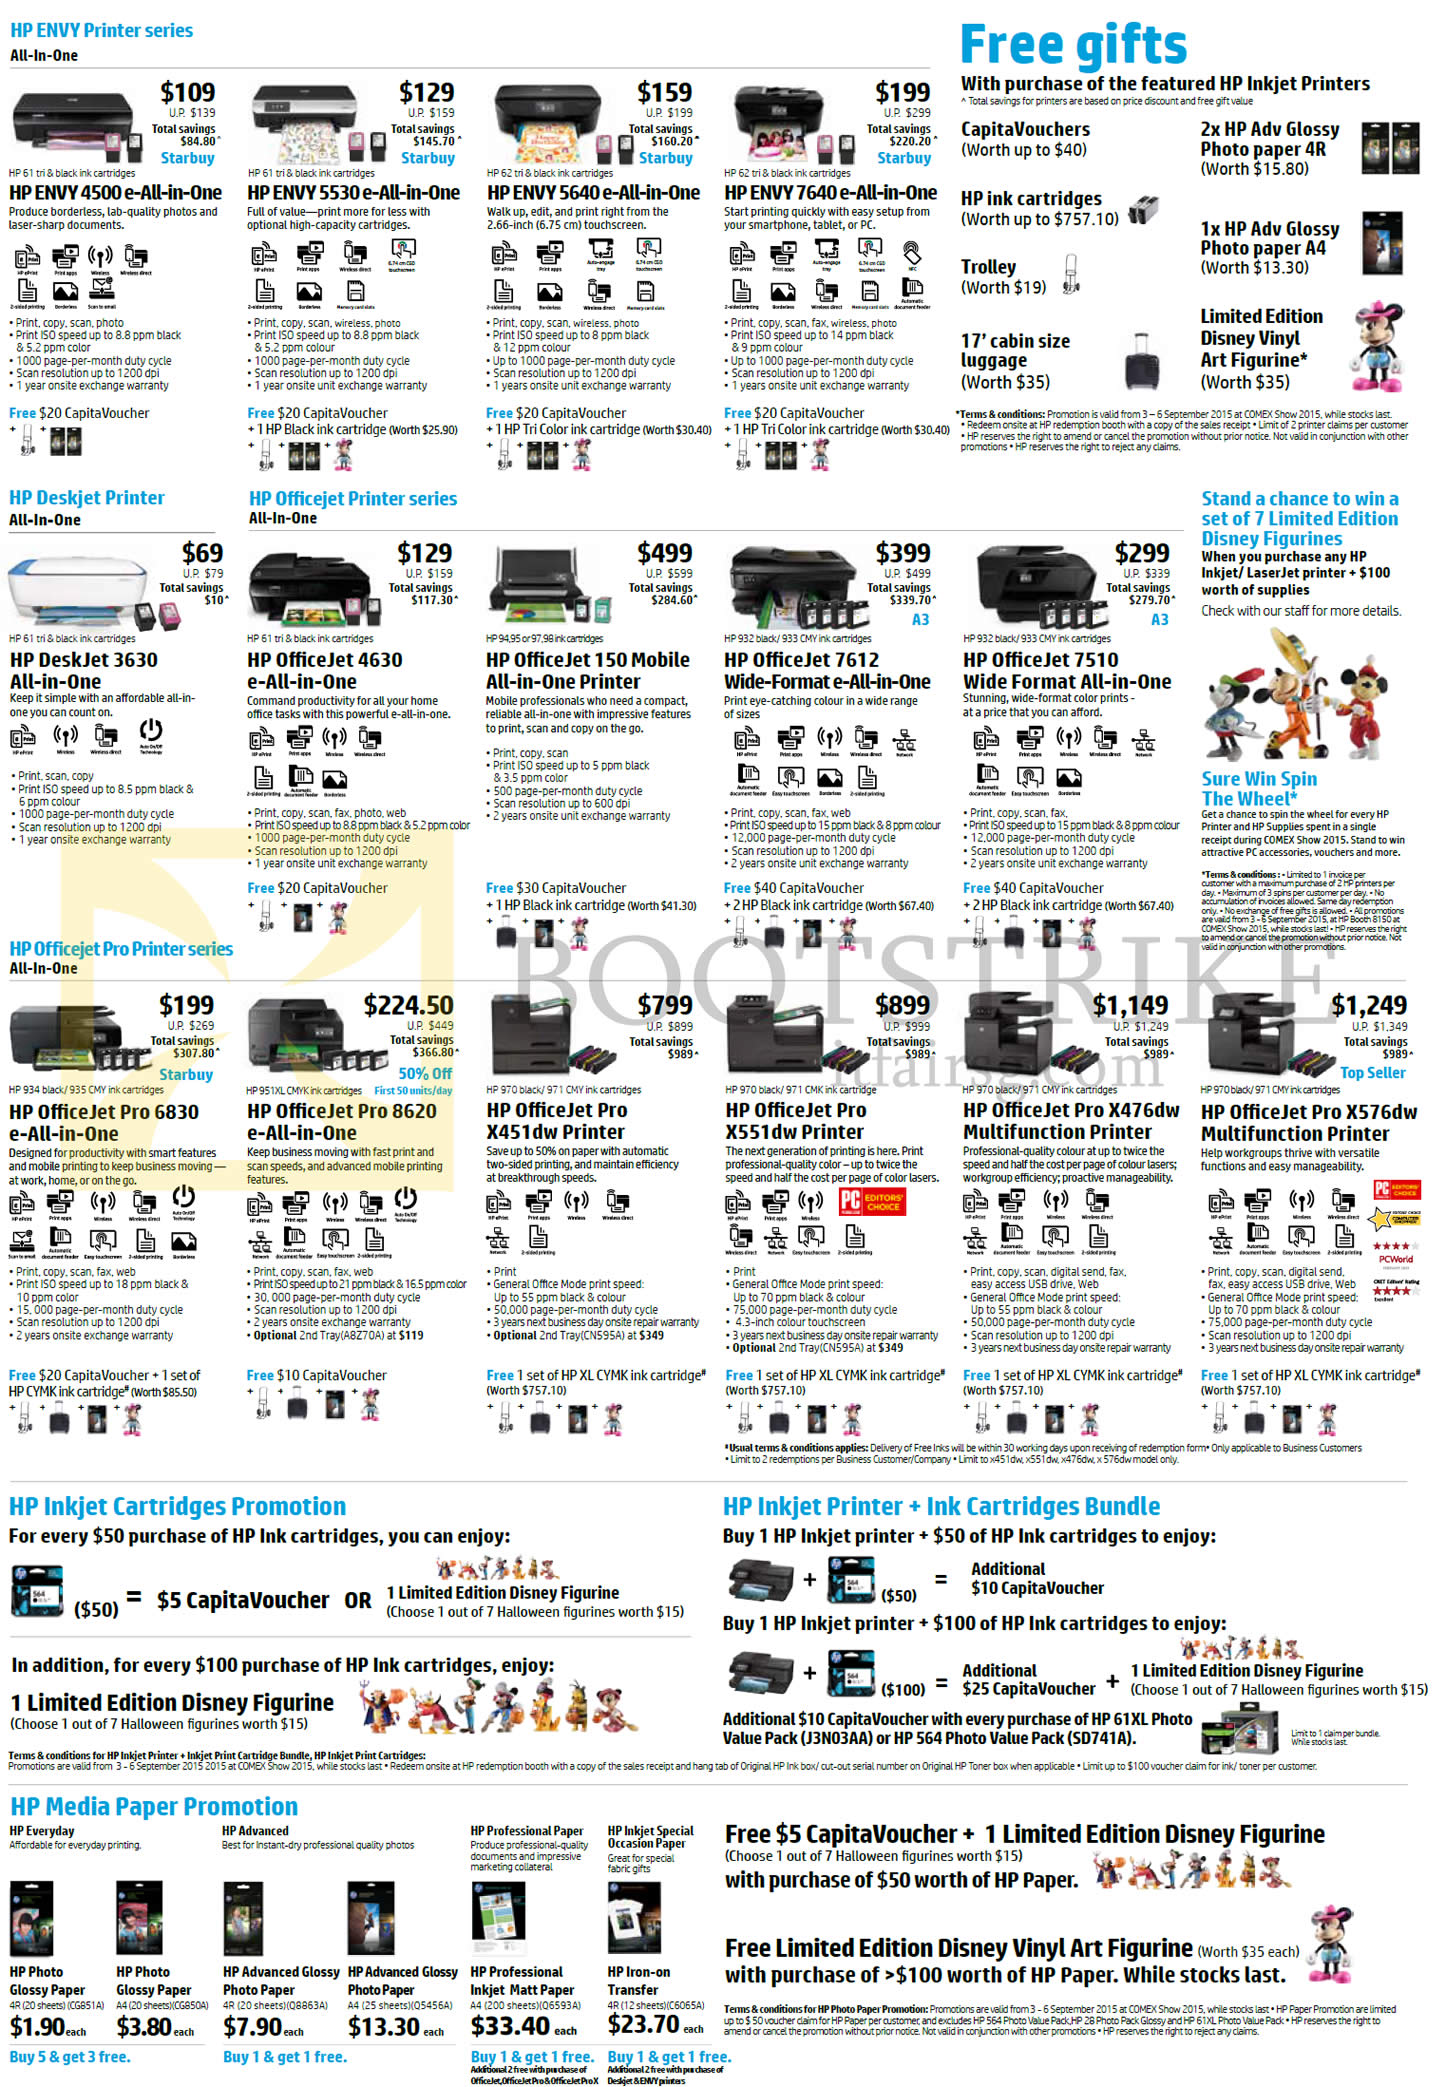 COMEX 2015 price list image brochure of HP Printers Envy 4500, 5530, 5640, 7640, Deskjet 3630, OfficeJet 4630, 150 Mobile, 7612, 7510, Pro 6830 8620 X451dw X476dw X576dw, Free Gifts, Inkjet Cartridges, Media Paper